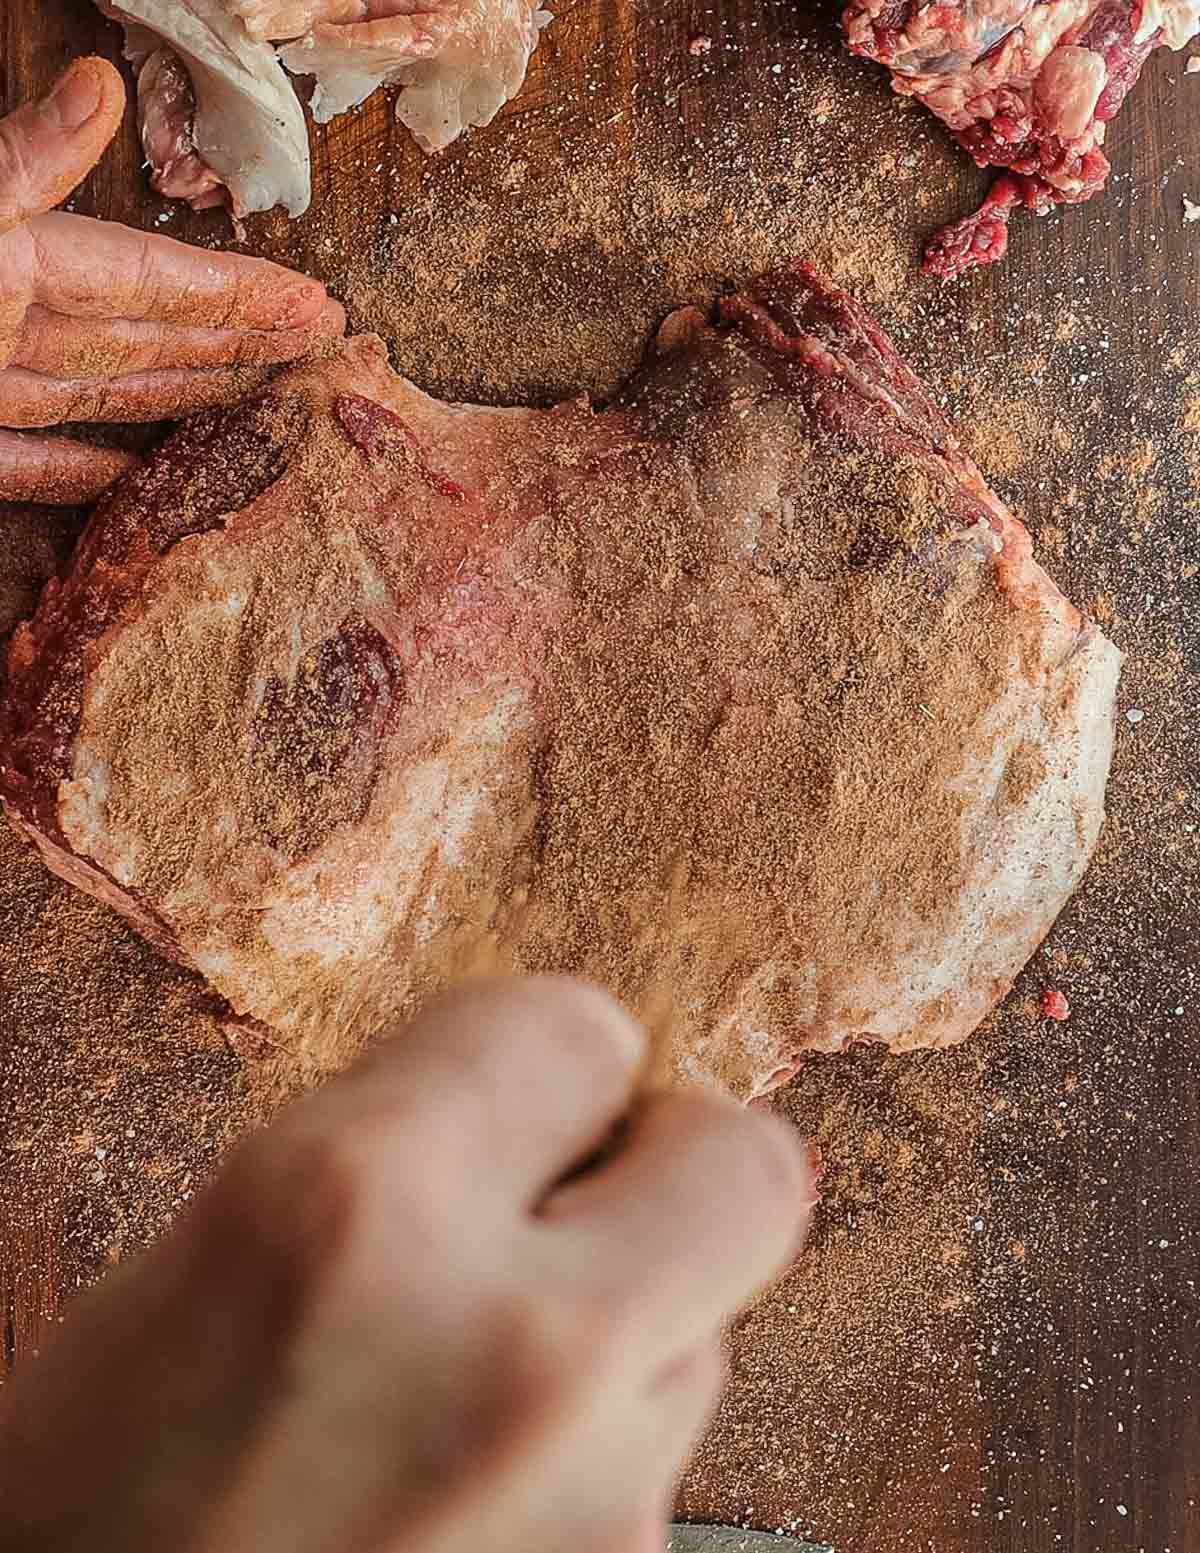 Seasoning a boneless leg of lamb with a dry rub spice blend.